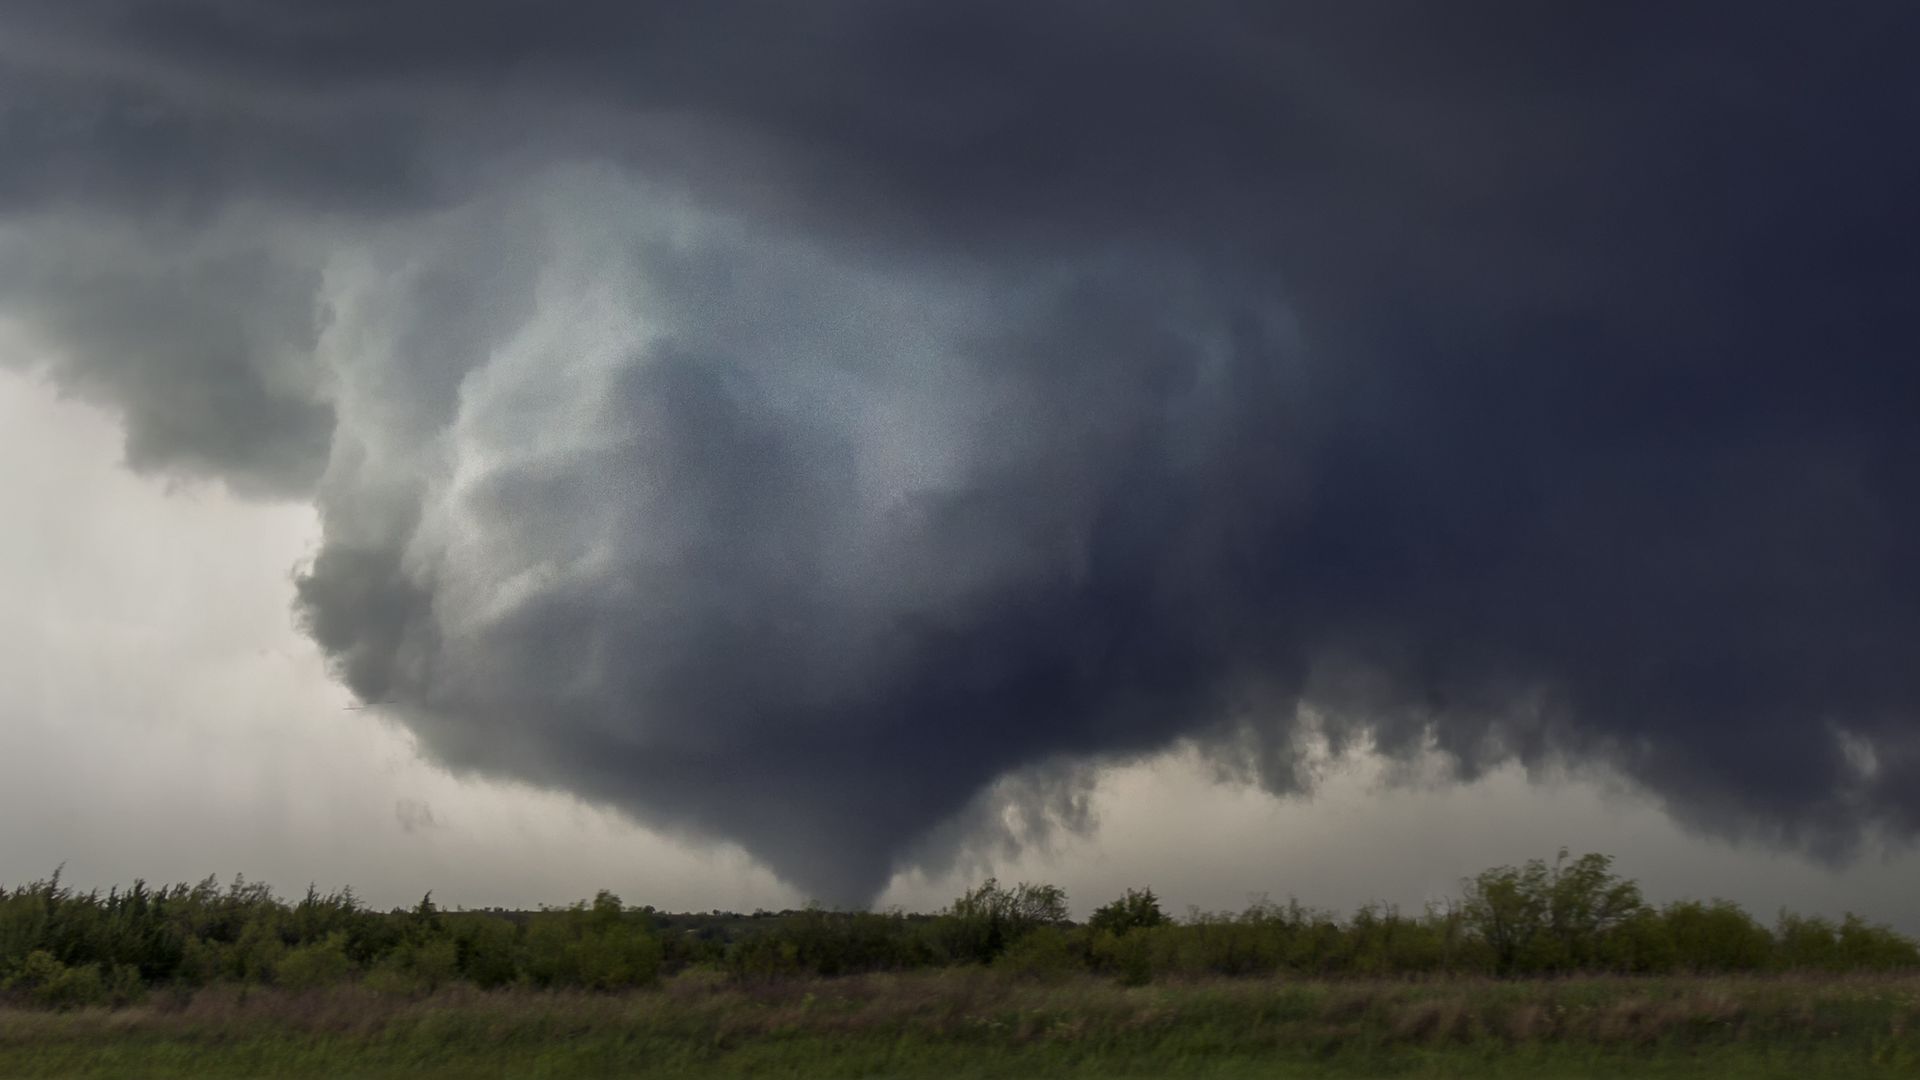 A tornado that hit Oklahoma